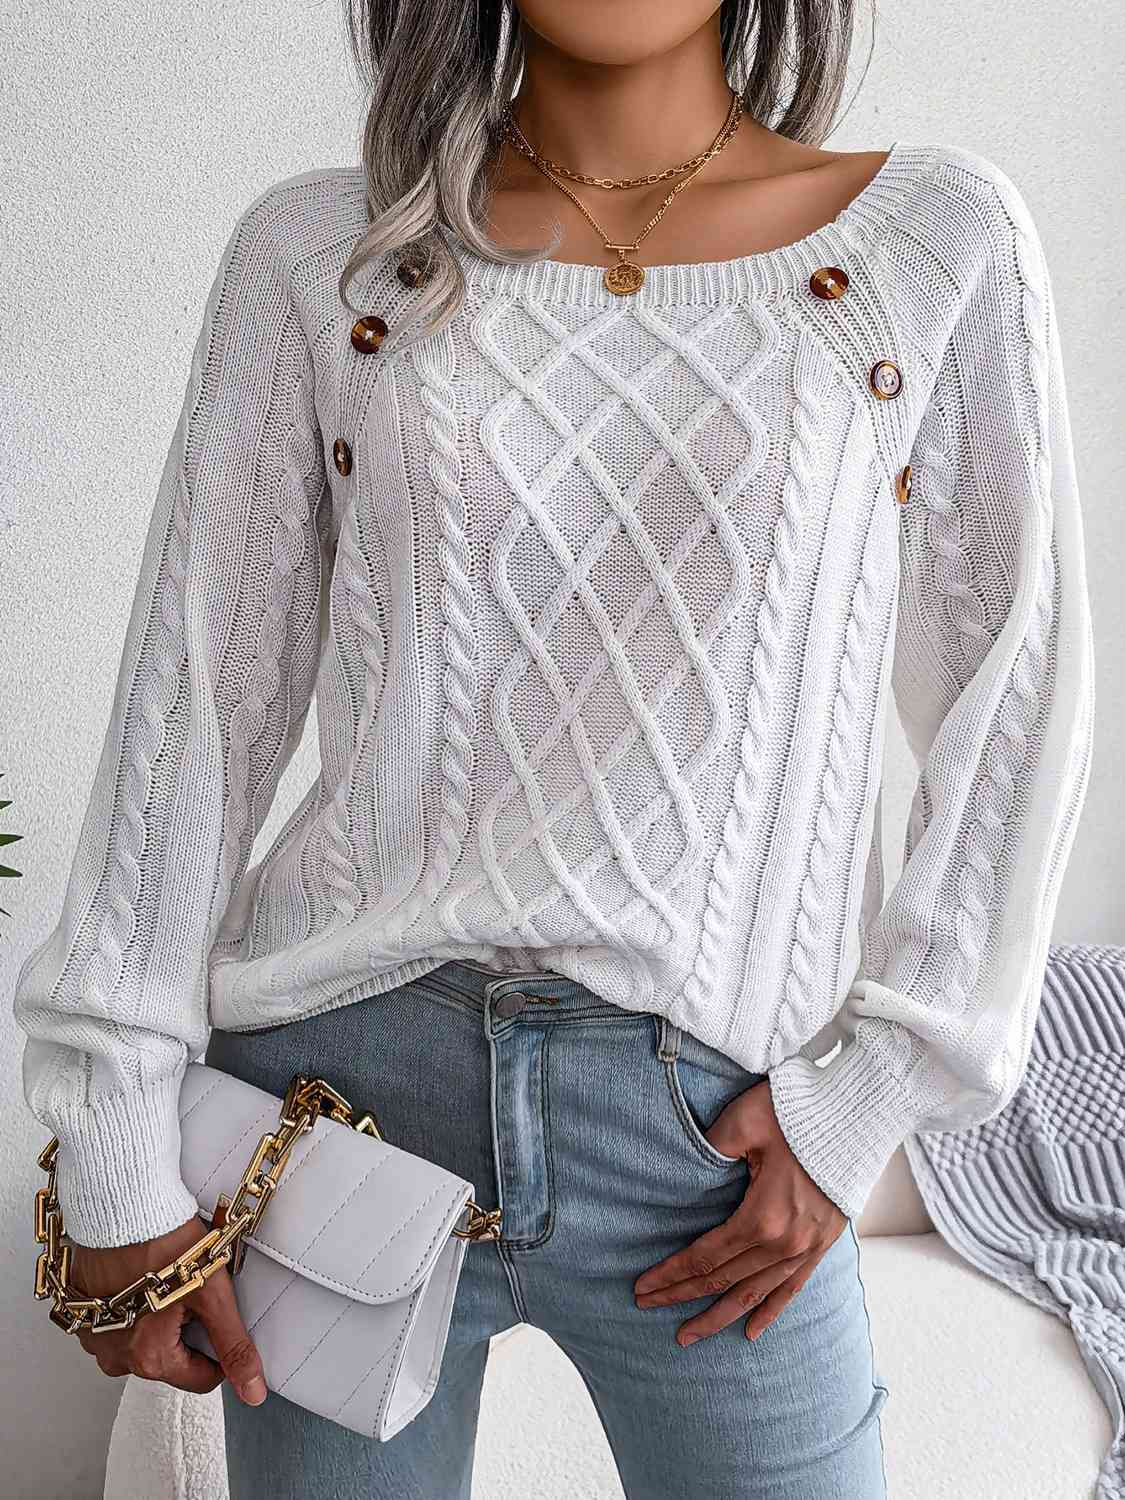 Decorative Button Cable-Knit Sweater (5 Colors) Shirts & Tops Krazy Heart Designs Boutique White S 